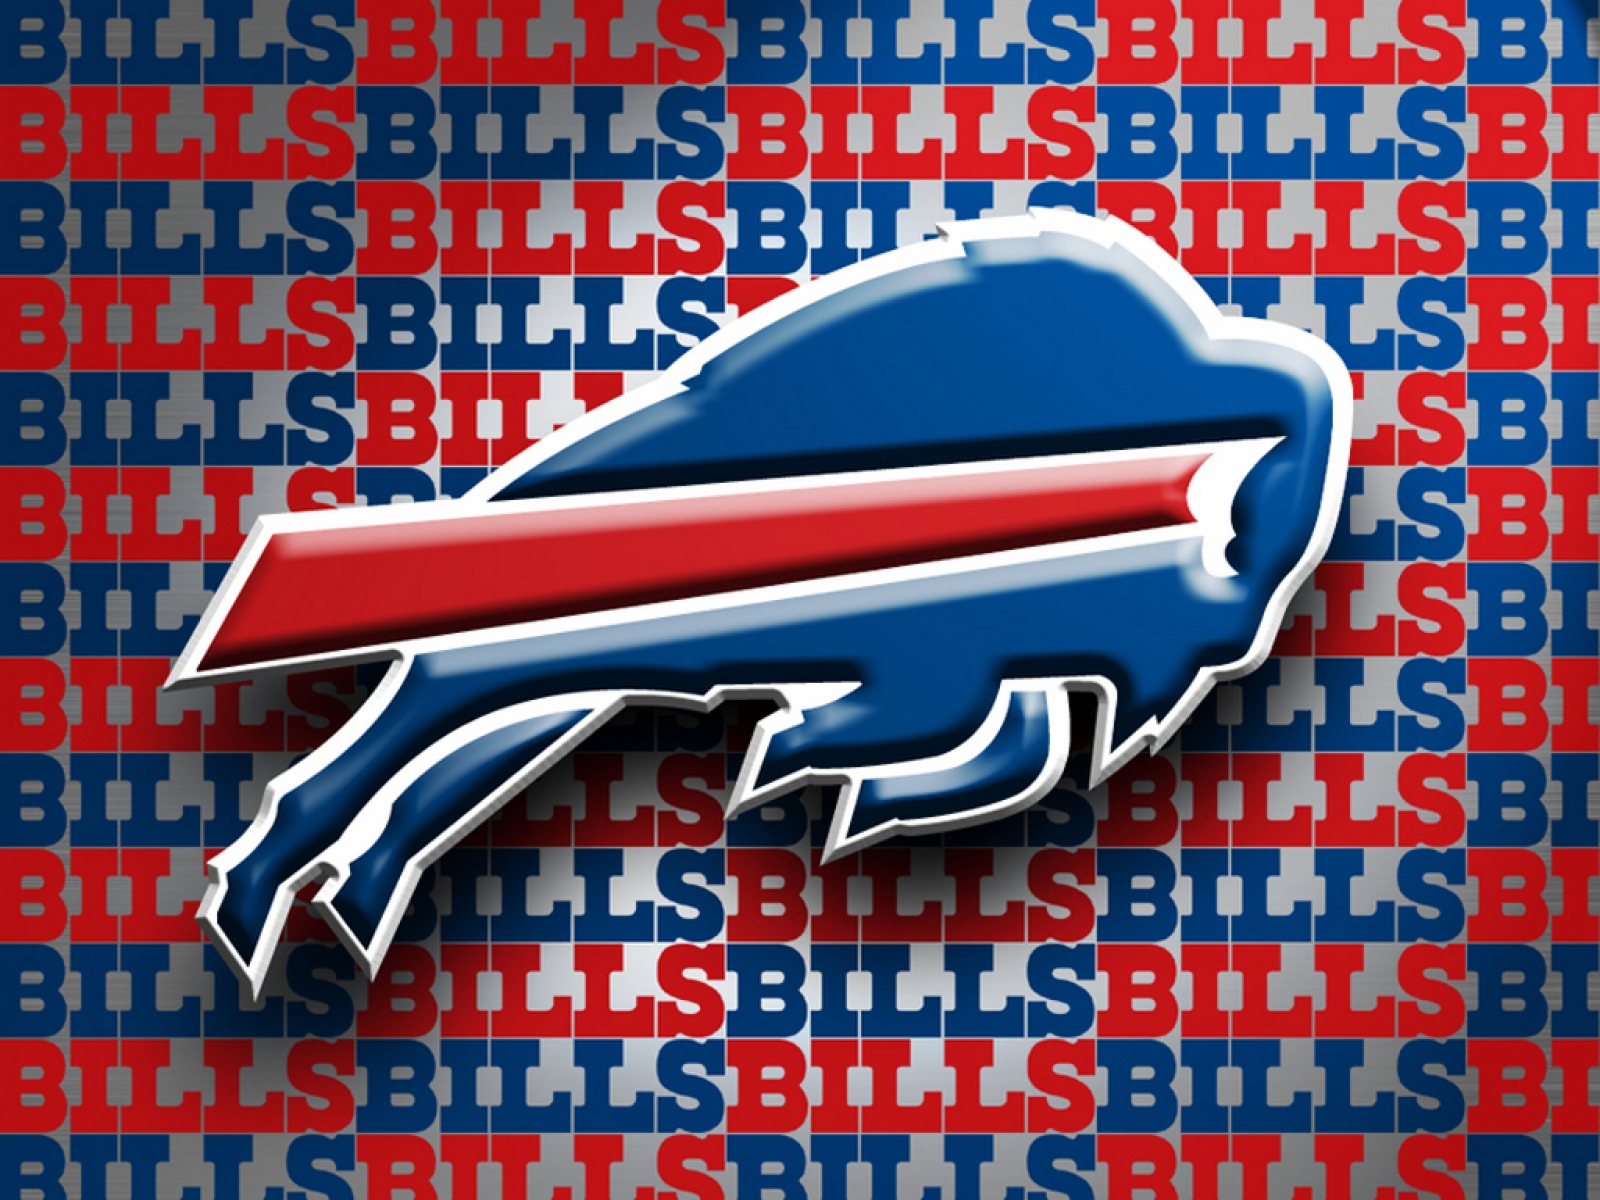 Free download Buffalo Bills desktop image Buffalo Bills